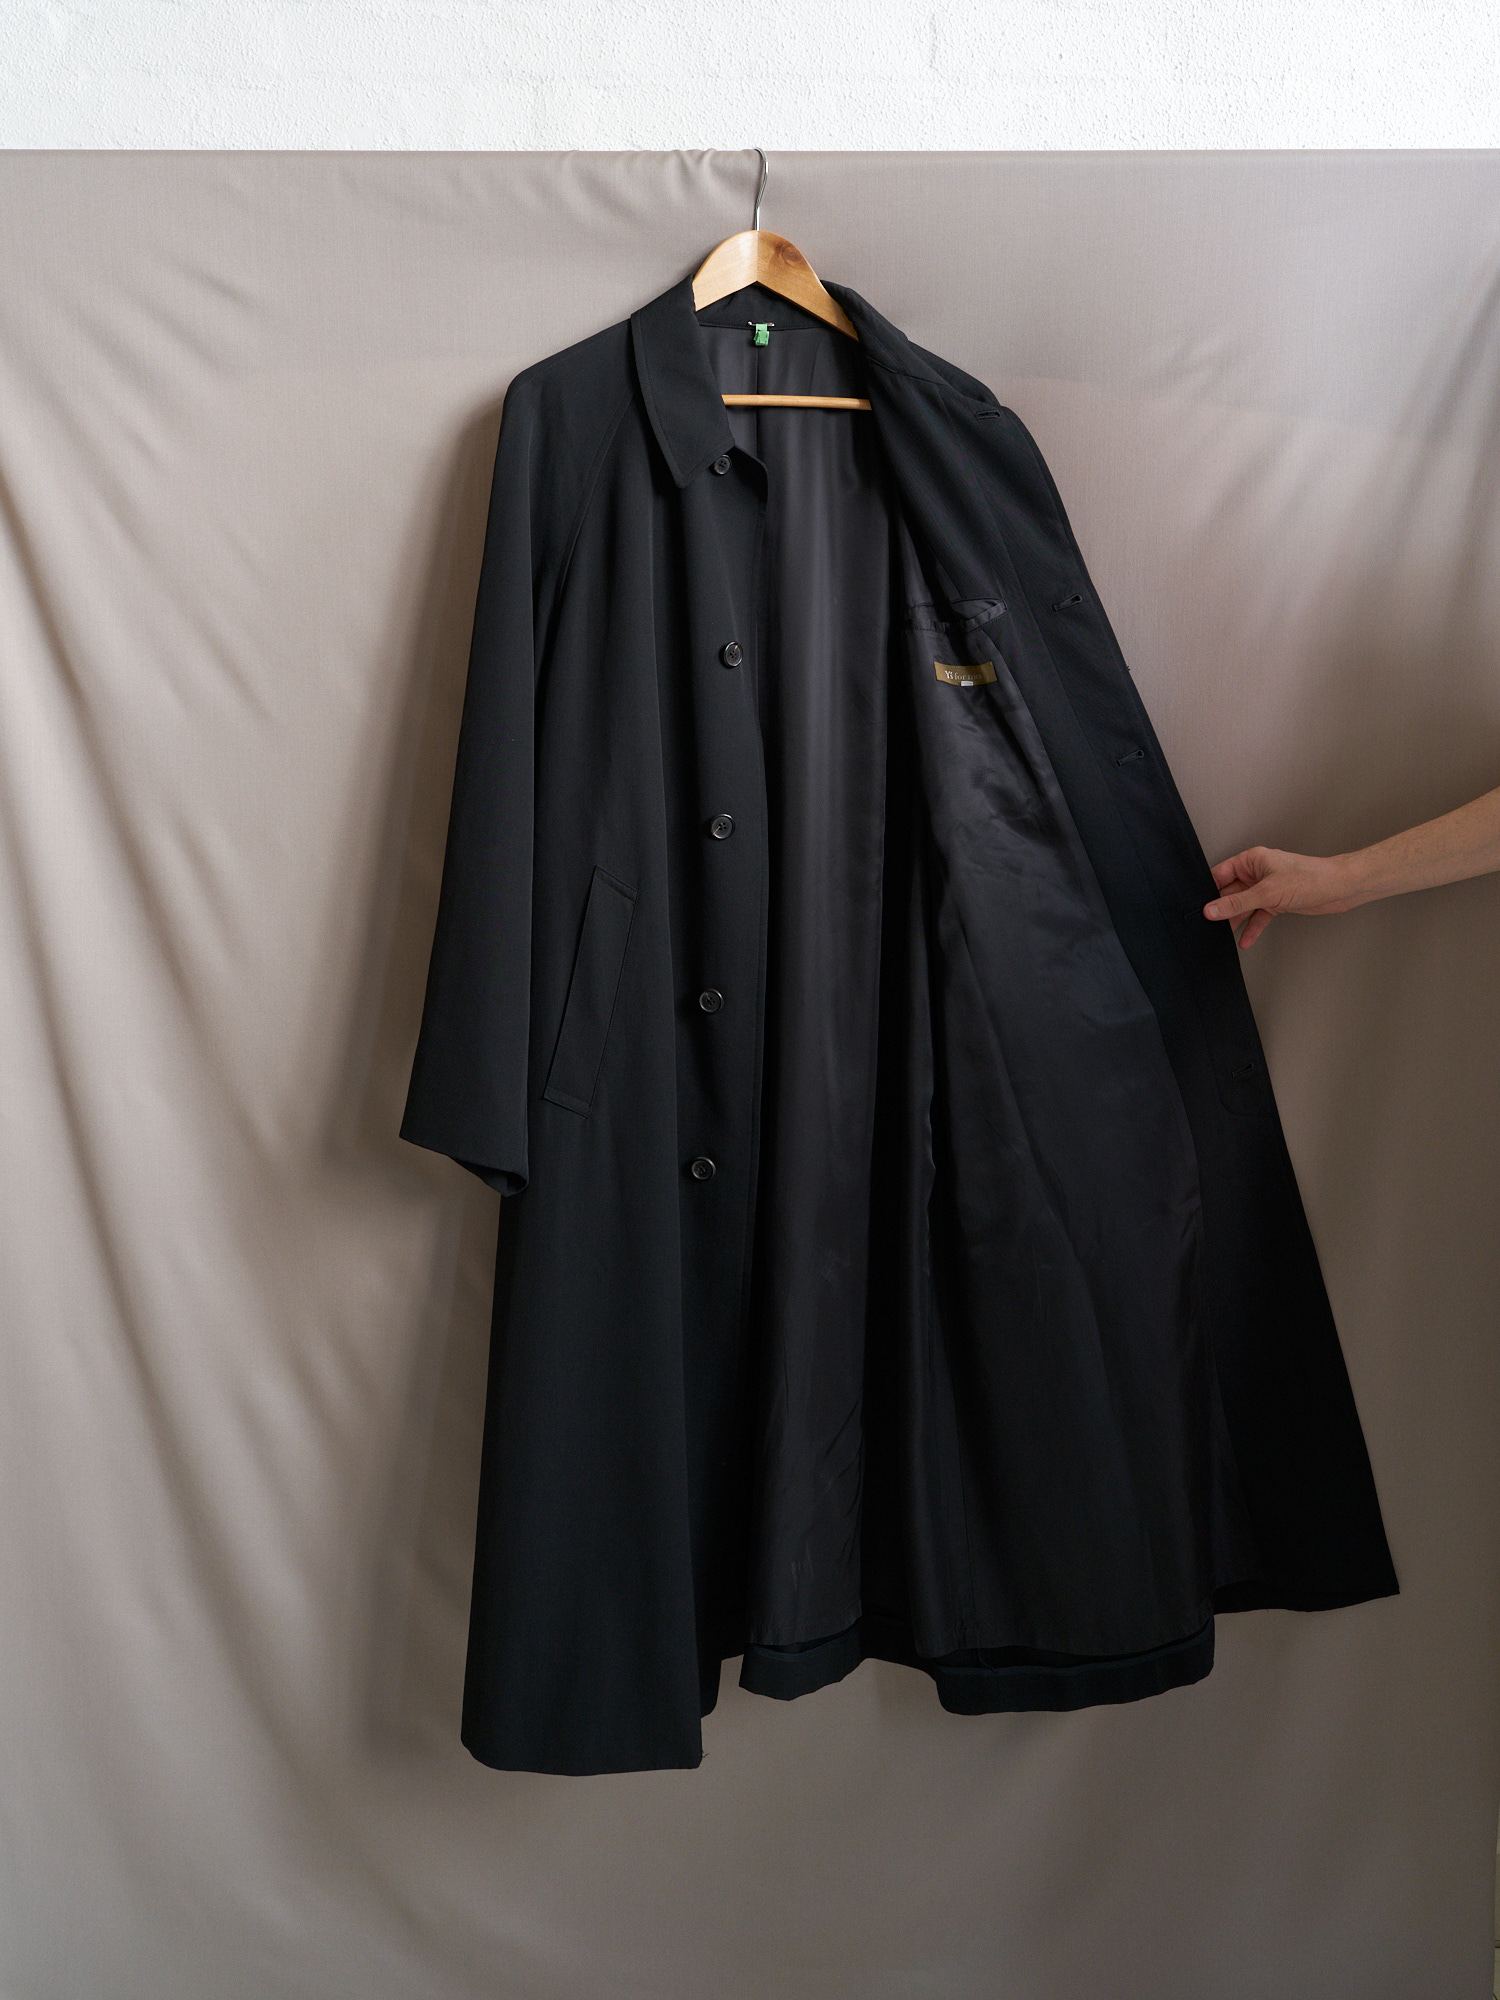 Y's for Men Yohji Yamamoto 1990s black wool gabardine mackintosh coat - sz M L